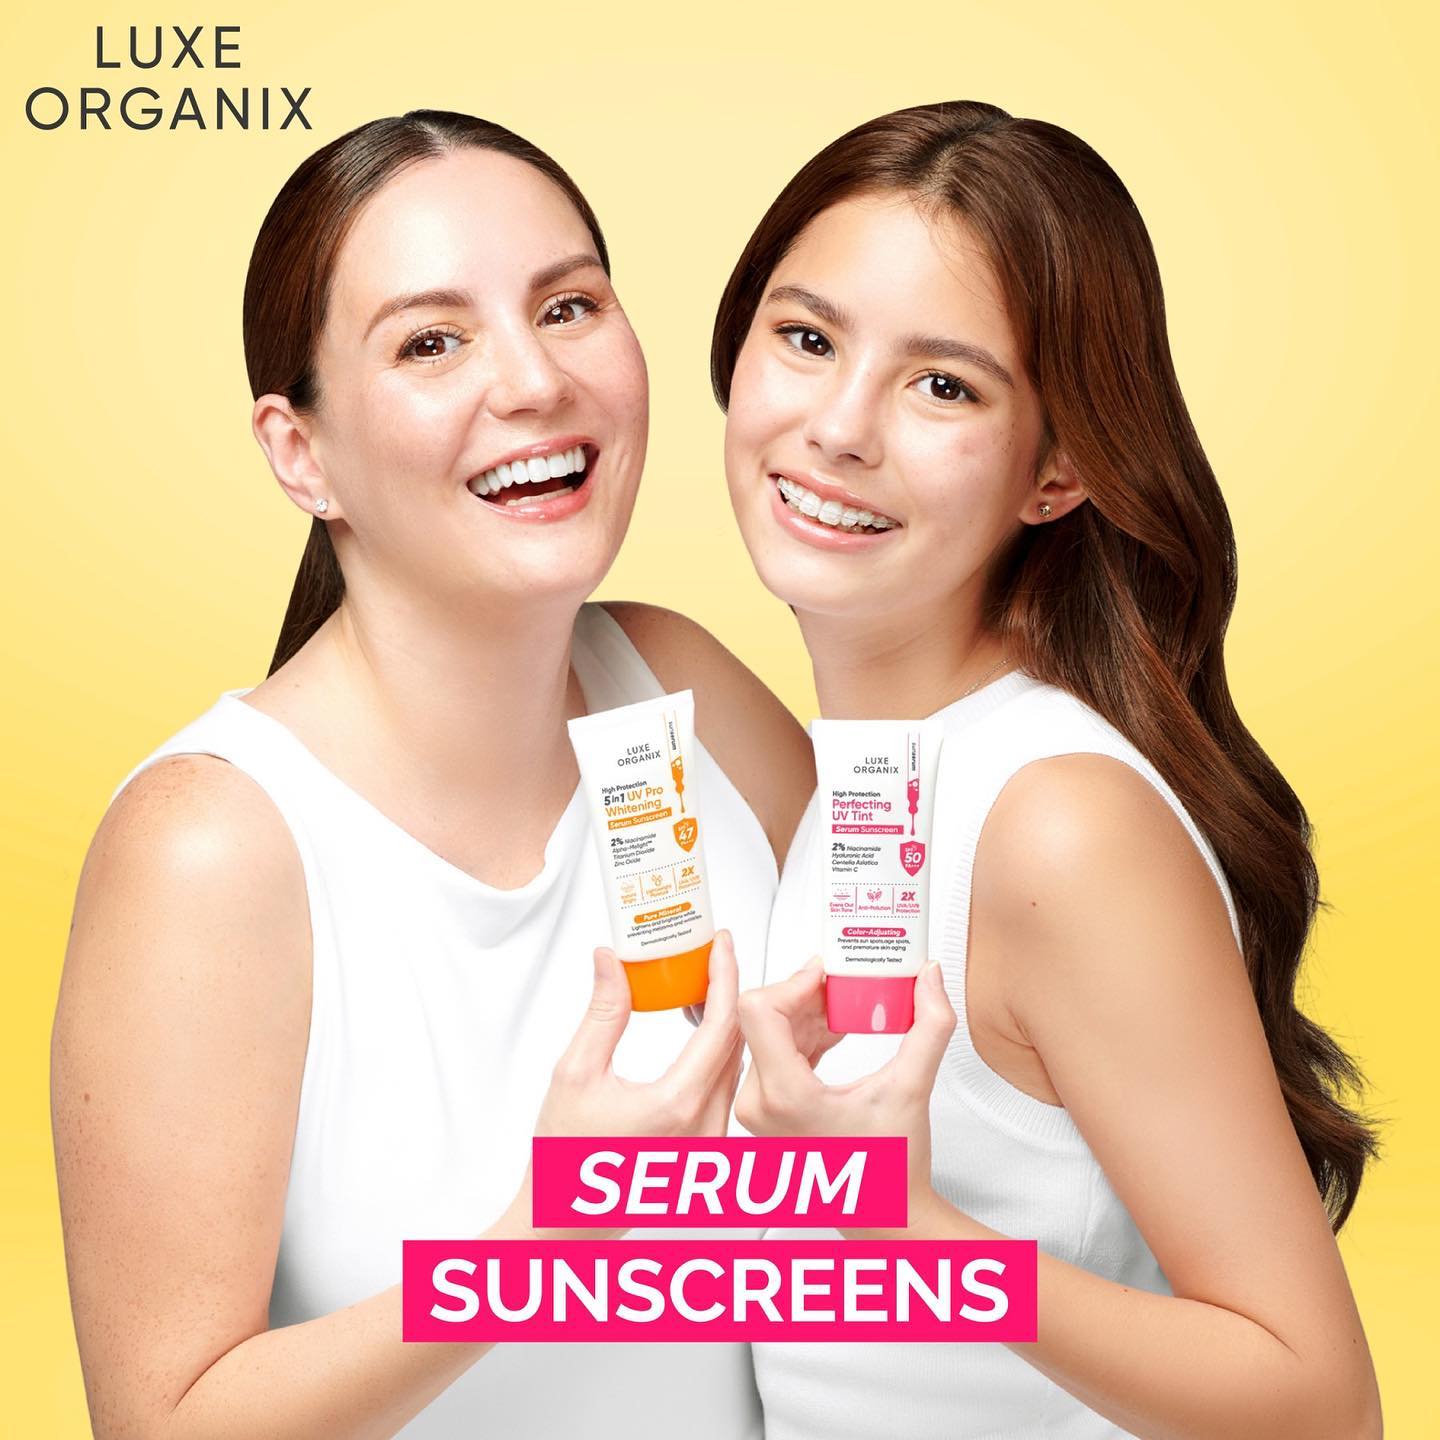 High Protection 5in1 UV Pro Whitening Serum Sunscreen SPF 47 PA+ 40mL